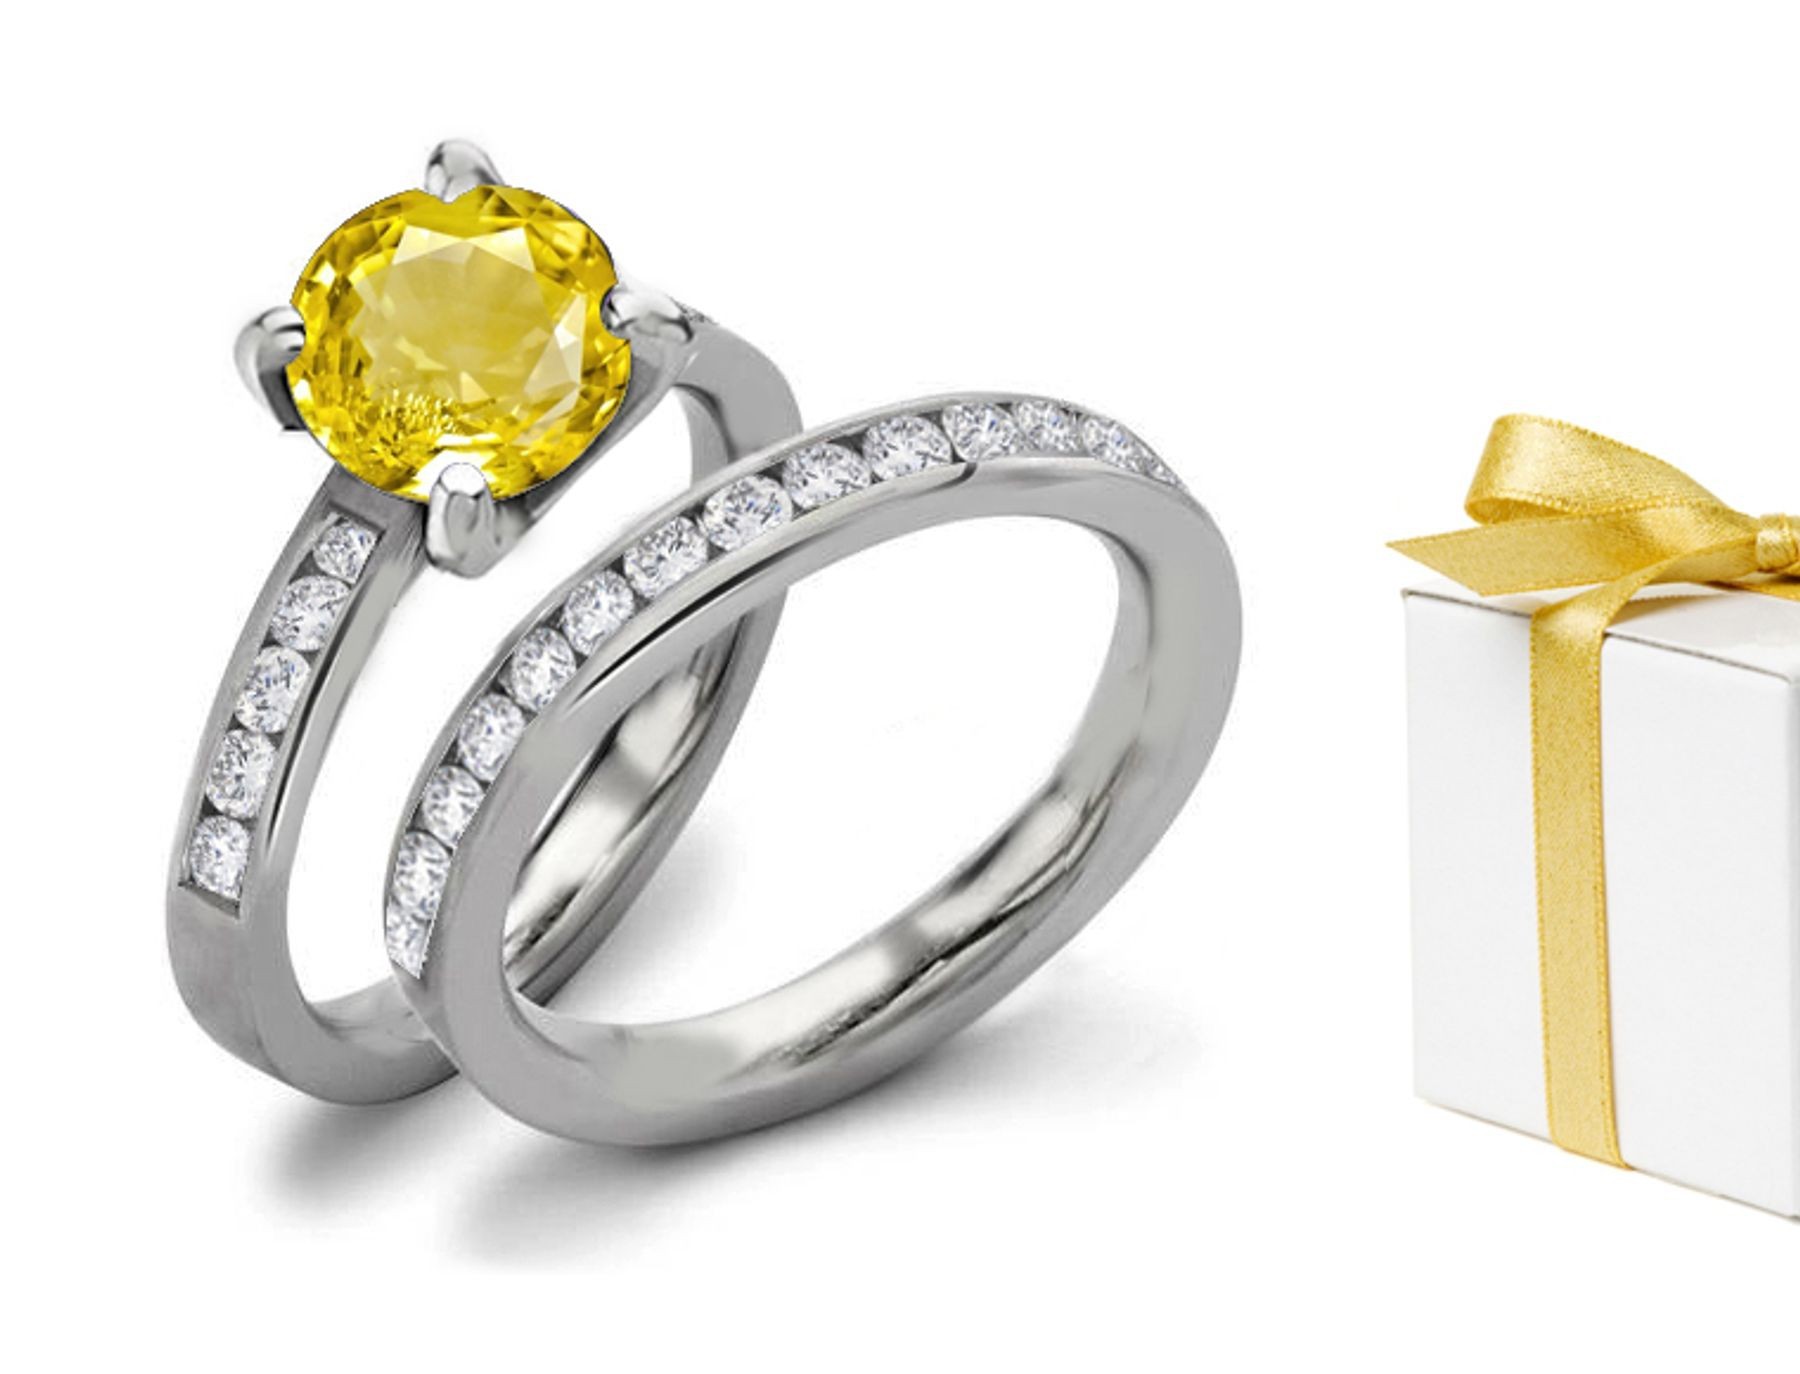 Impressive: Fine Yellow Sapphire & Diamond Engagement & Wedding Rings